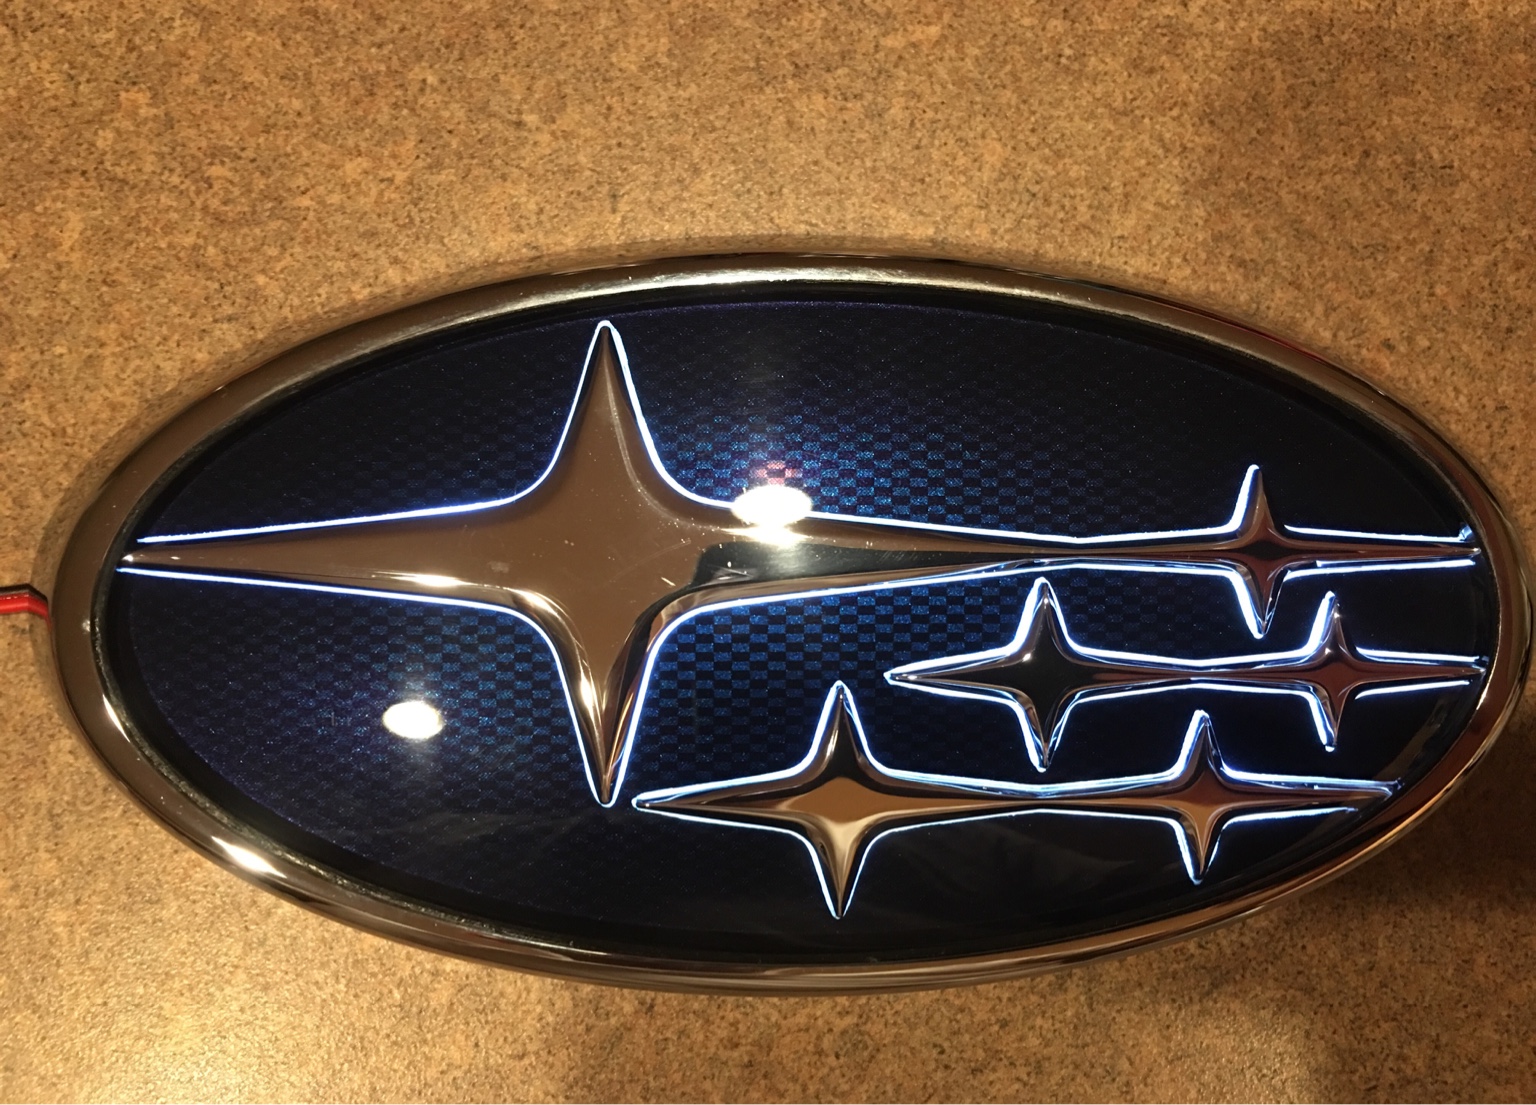 Update on Subaru WRX: Installation of LED Backlit Badge Completed